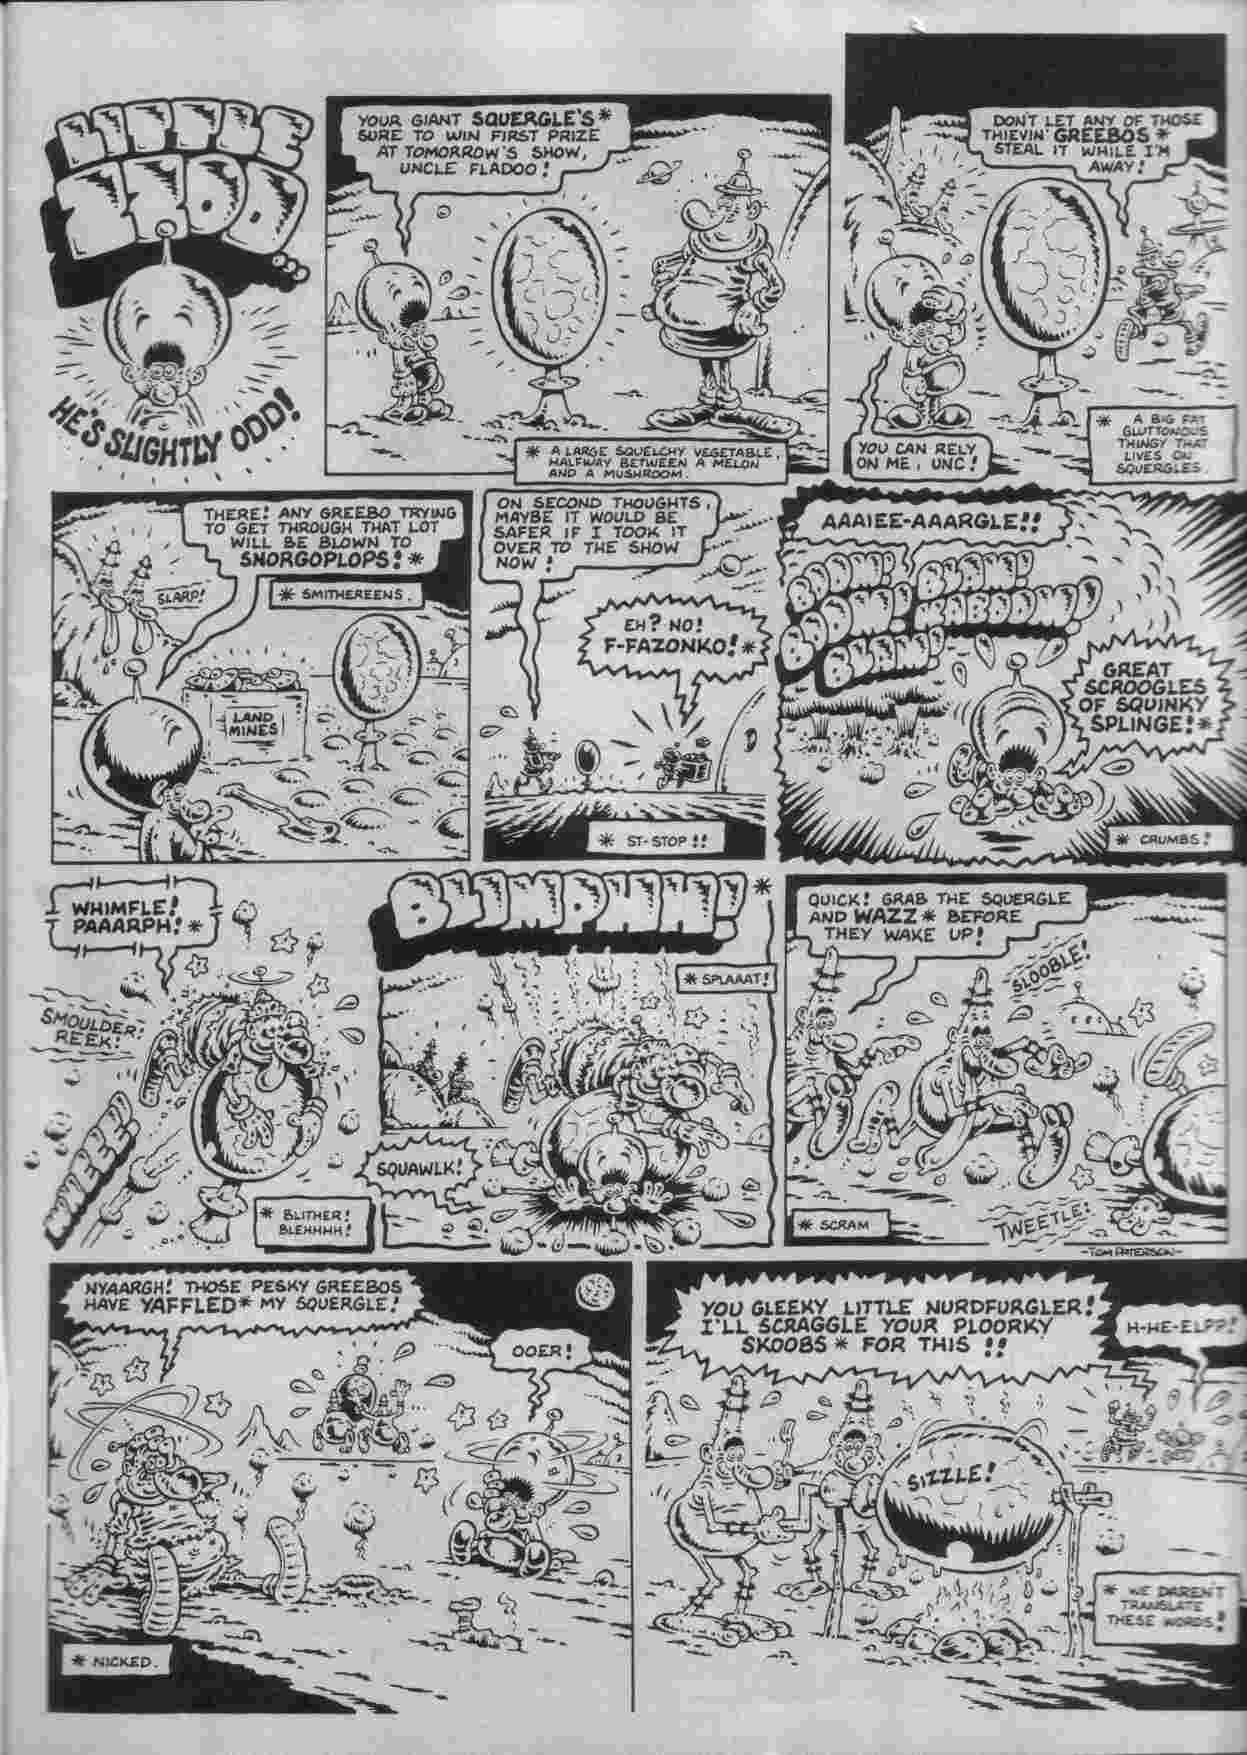 Peter Gray's Tom Paterson comic info